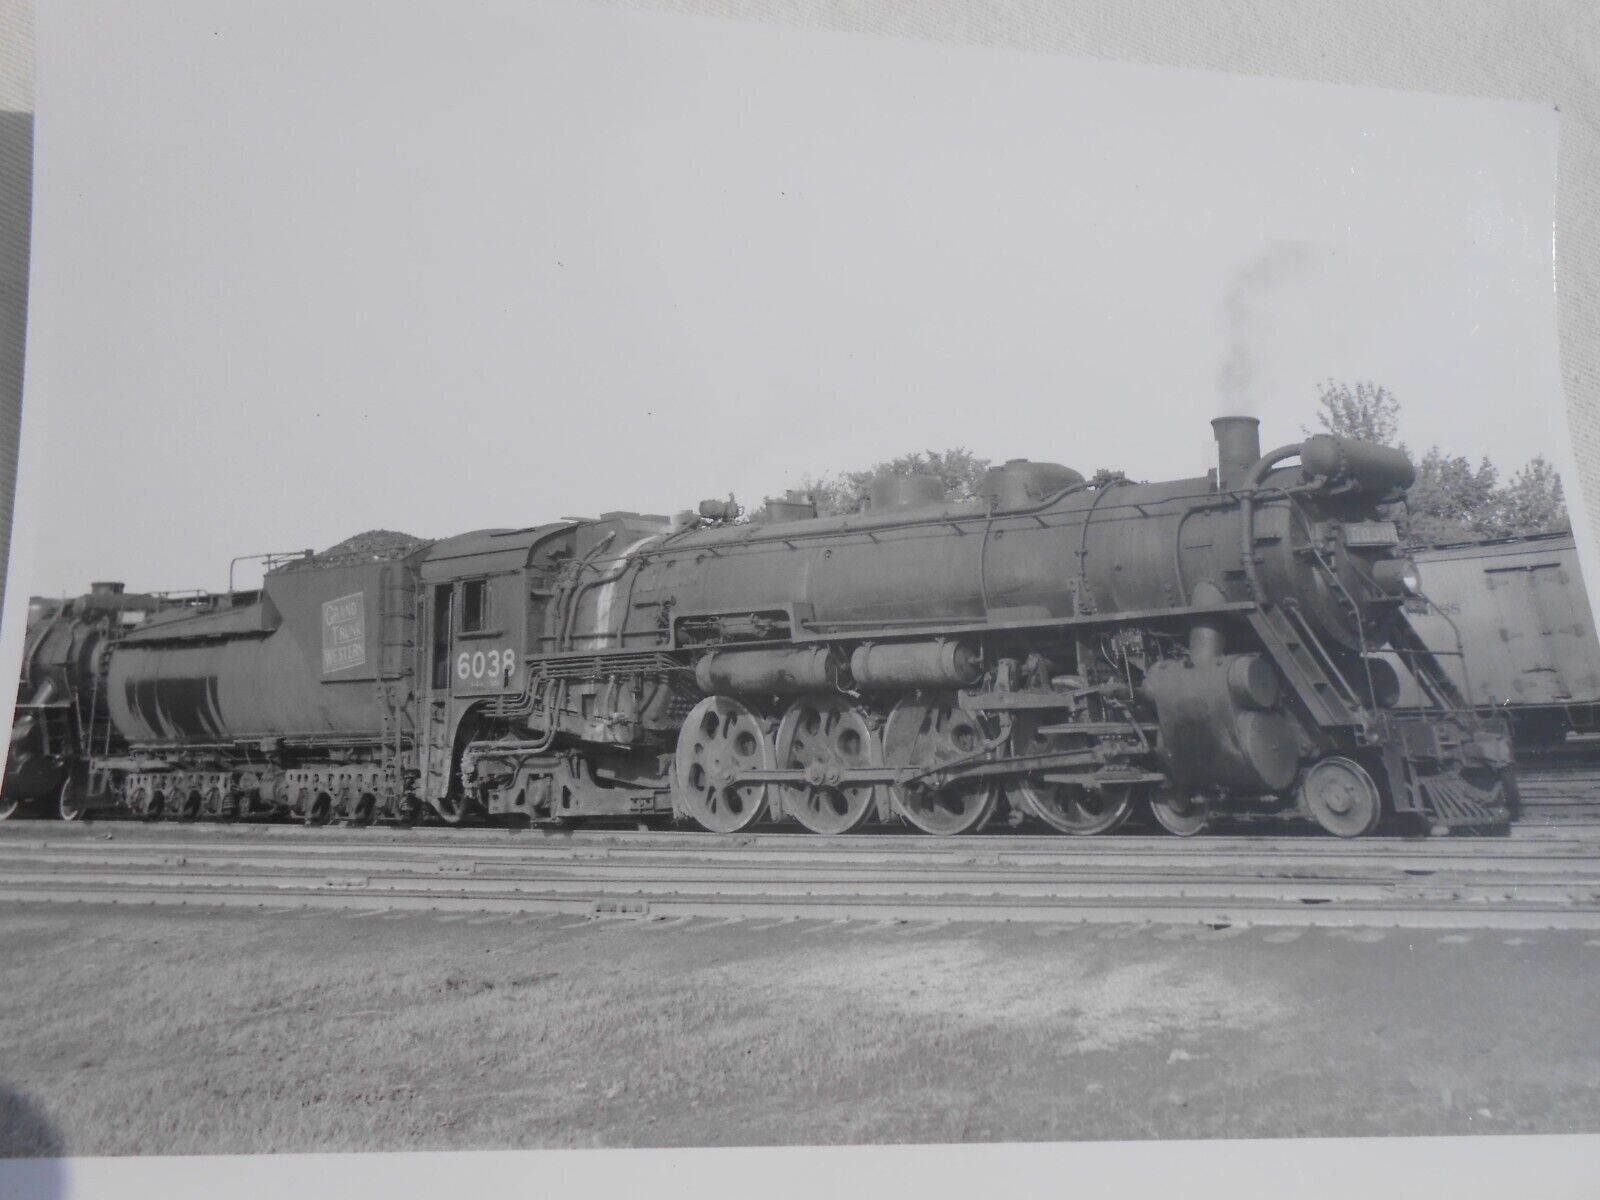 Grand Trunk Western 4-8-2 Mountain Type 6038 1956 Train Photo 8 x 10 RR1